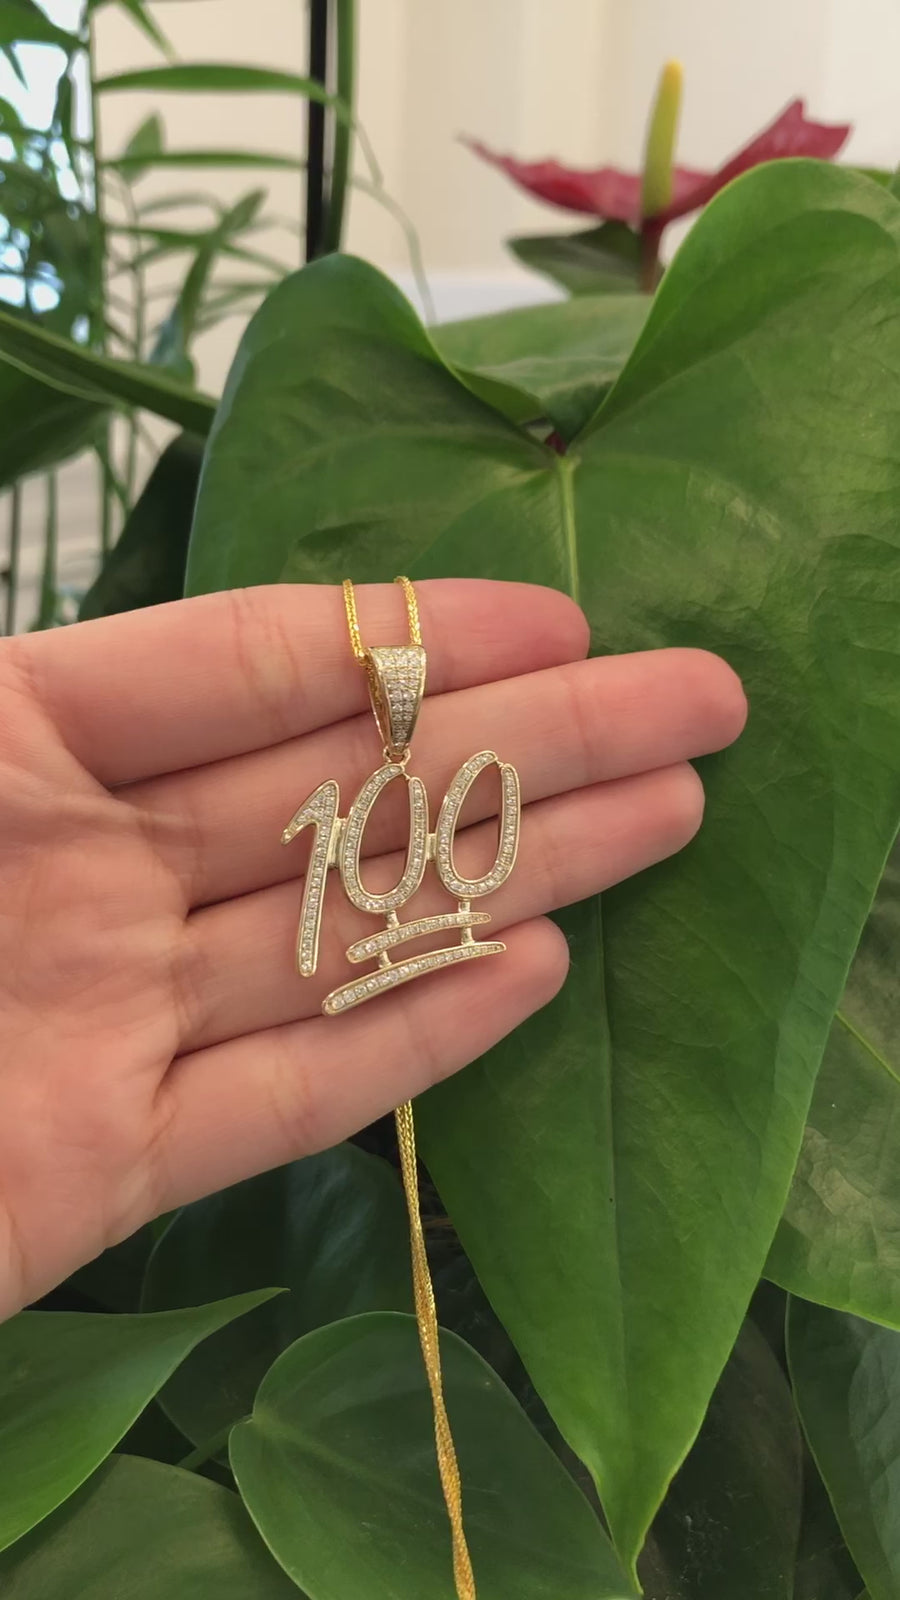 14K Yellow Gold "100 Emoji" Pendant Necklace With VS1 Diamonds